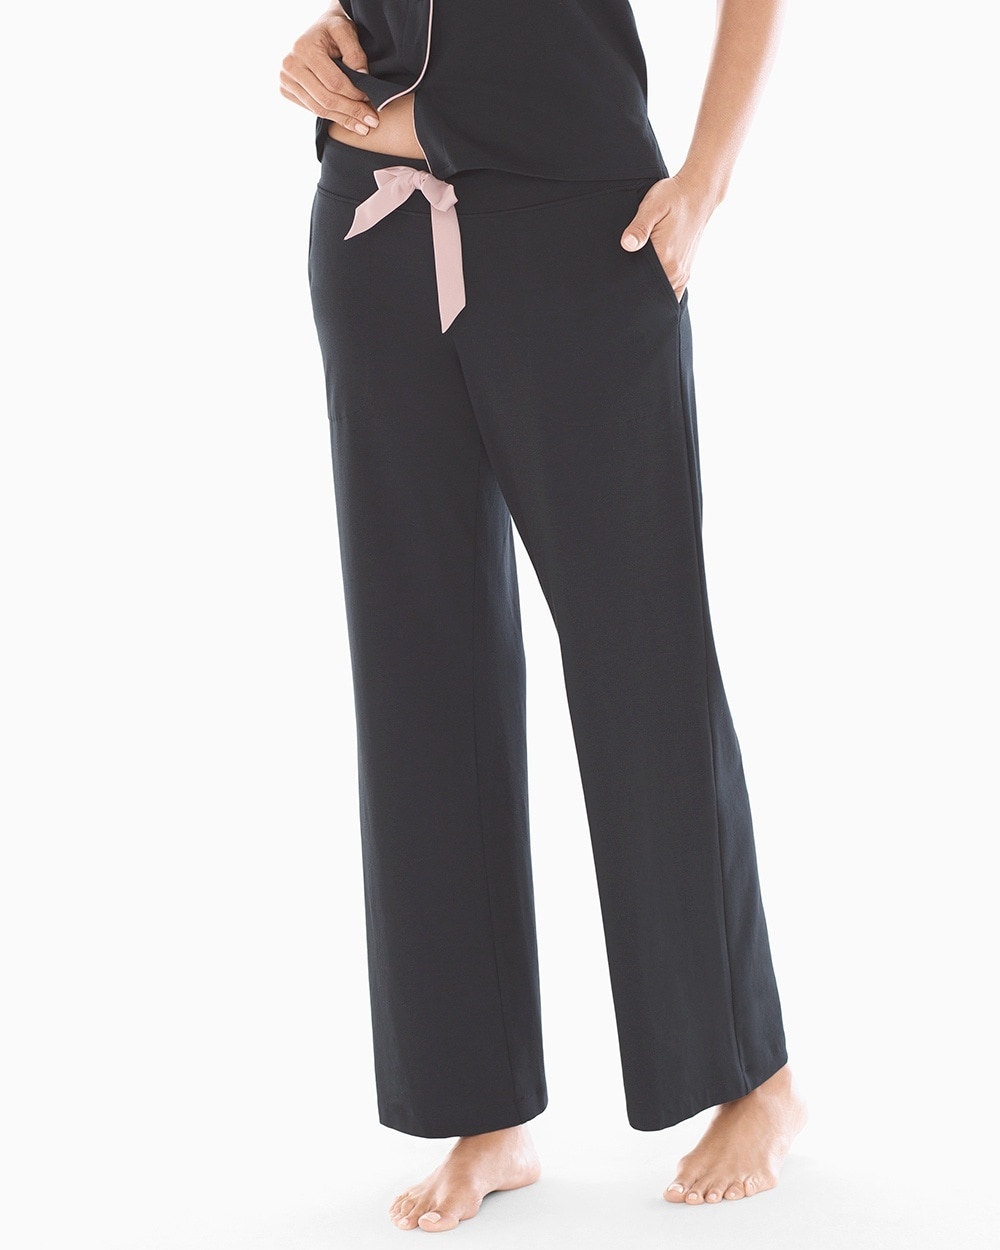 Embraceable Pajama Pants Black with Pink Trim